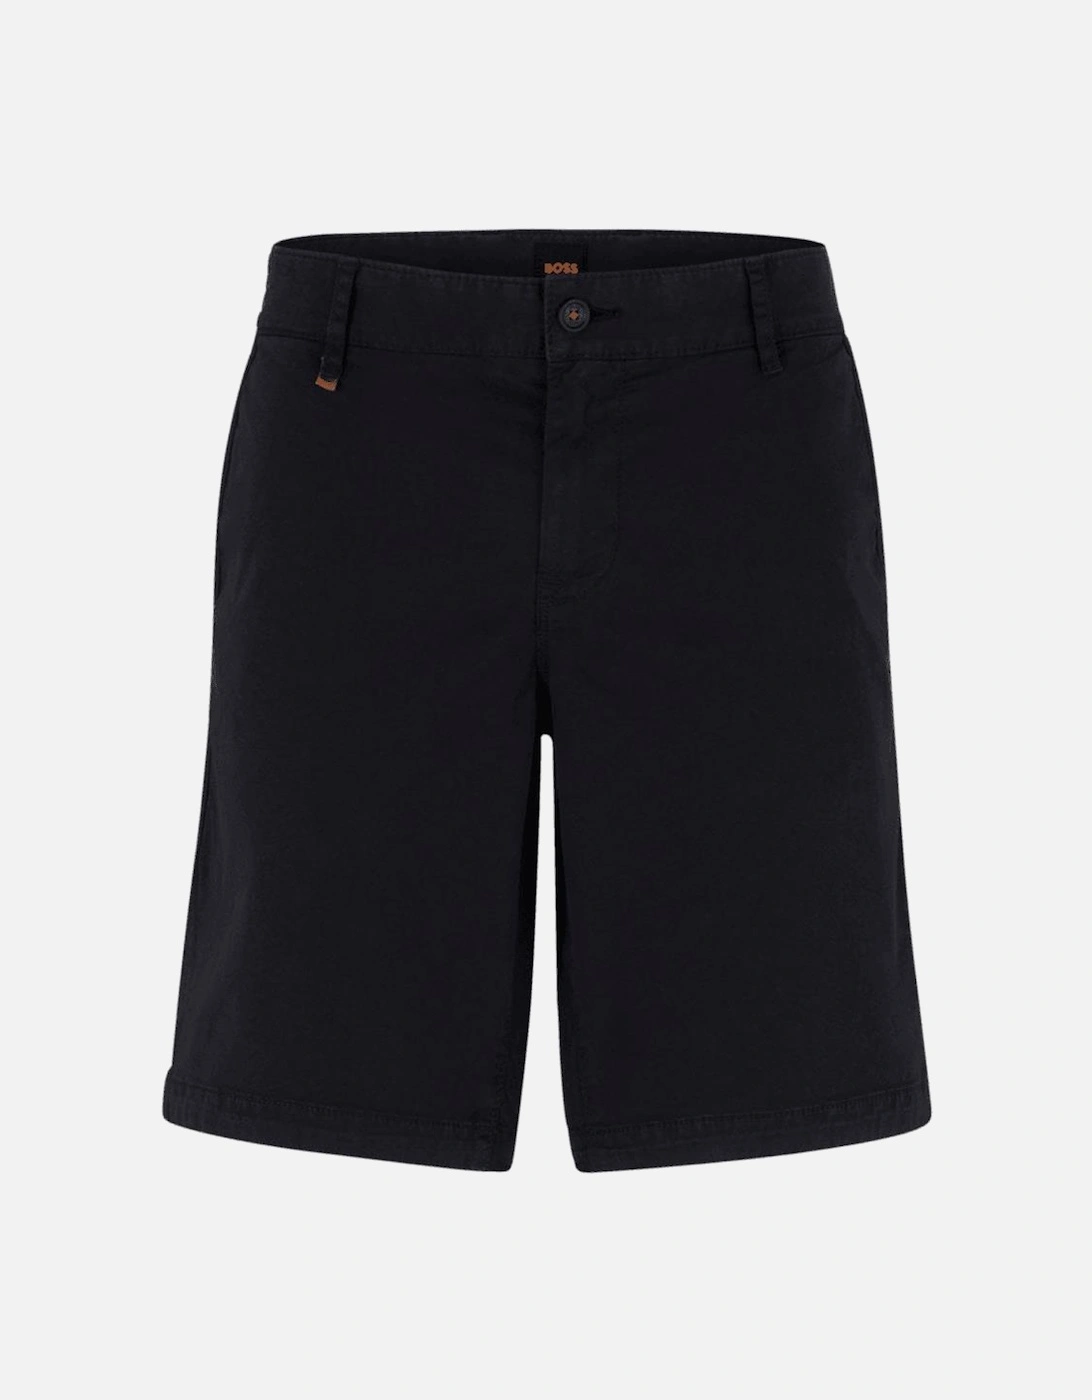 Schino Slim Cotton Black Chino Shorts, 3 of 2